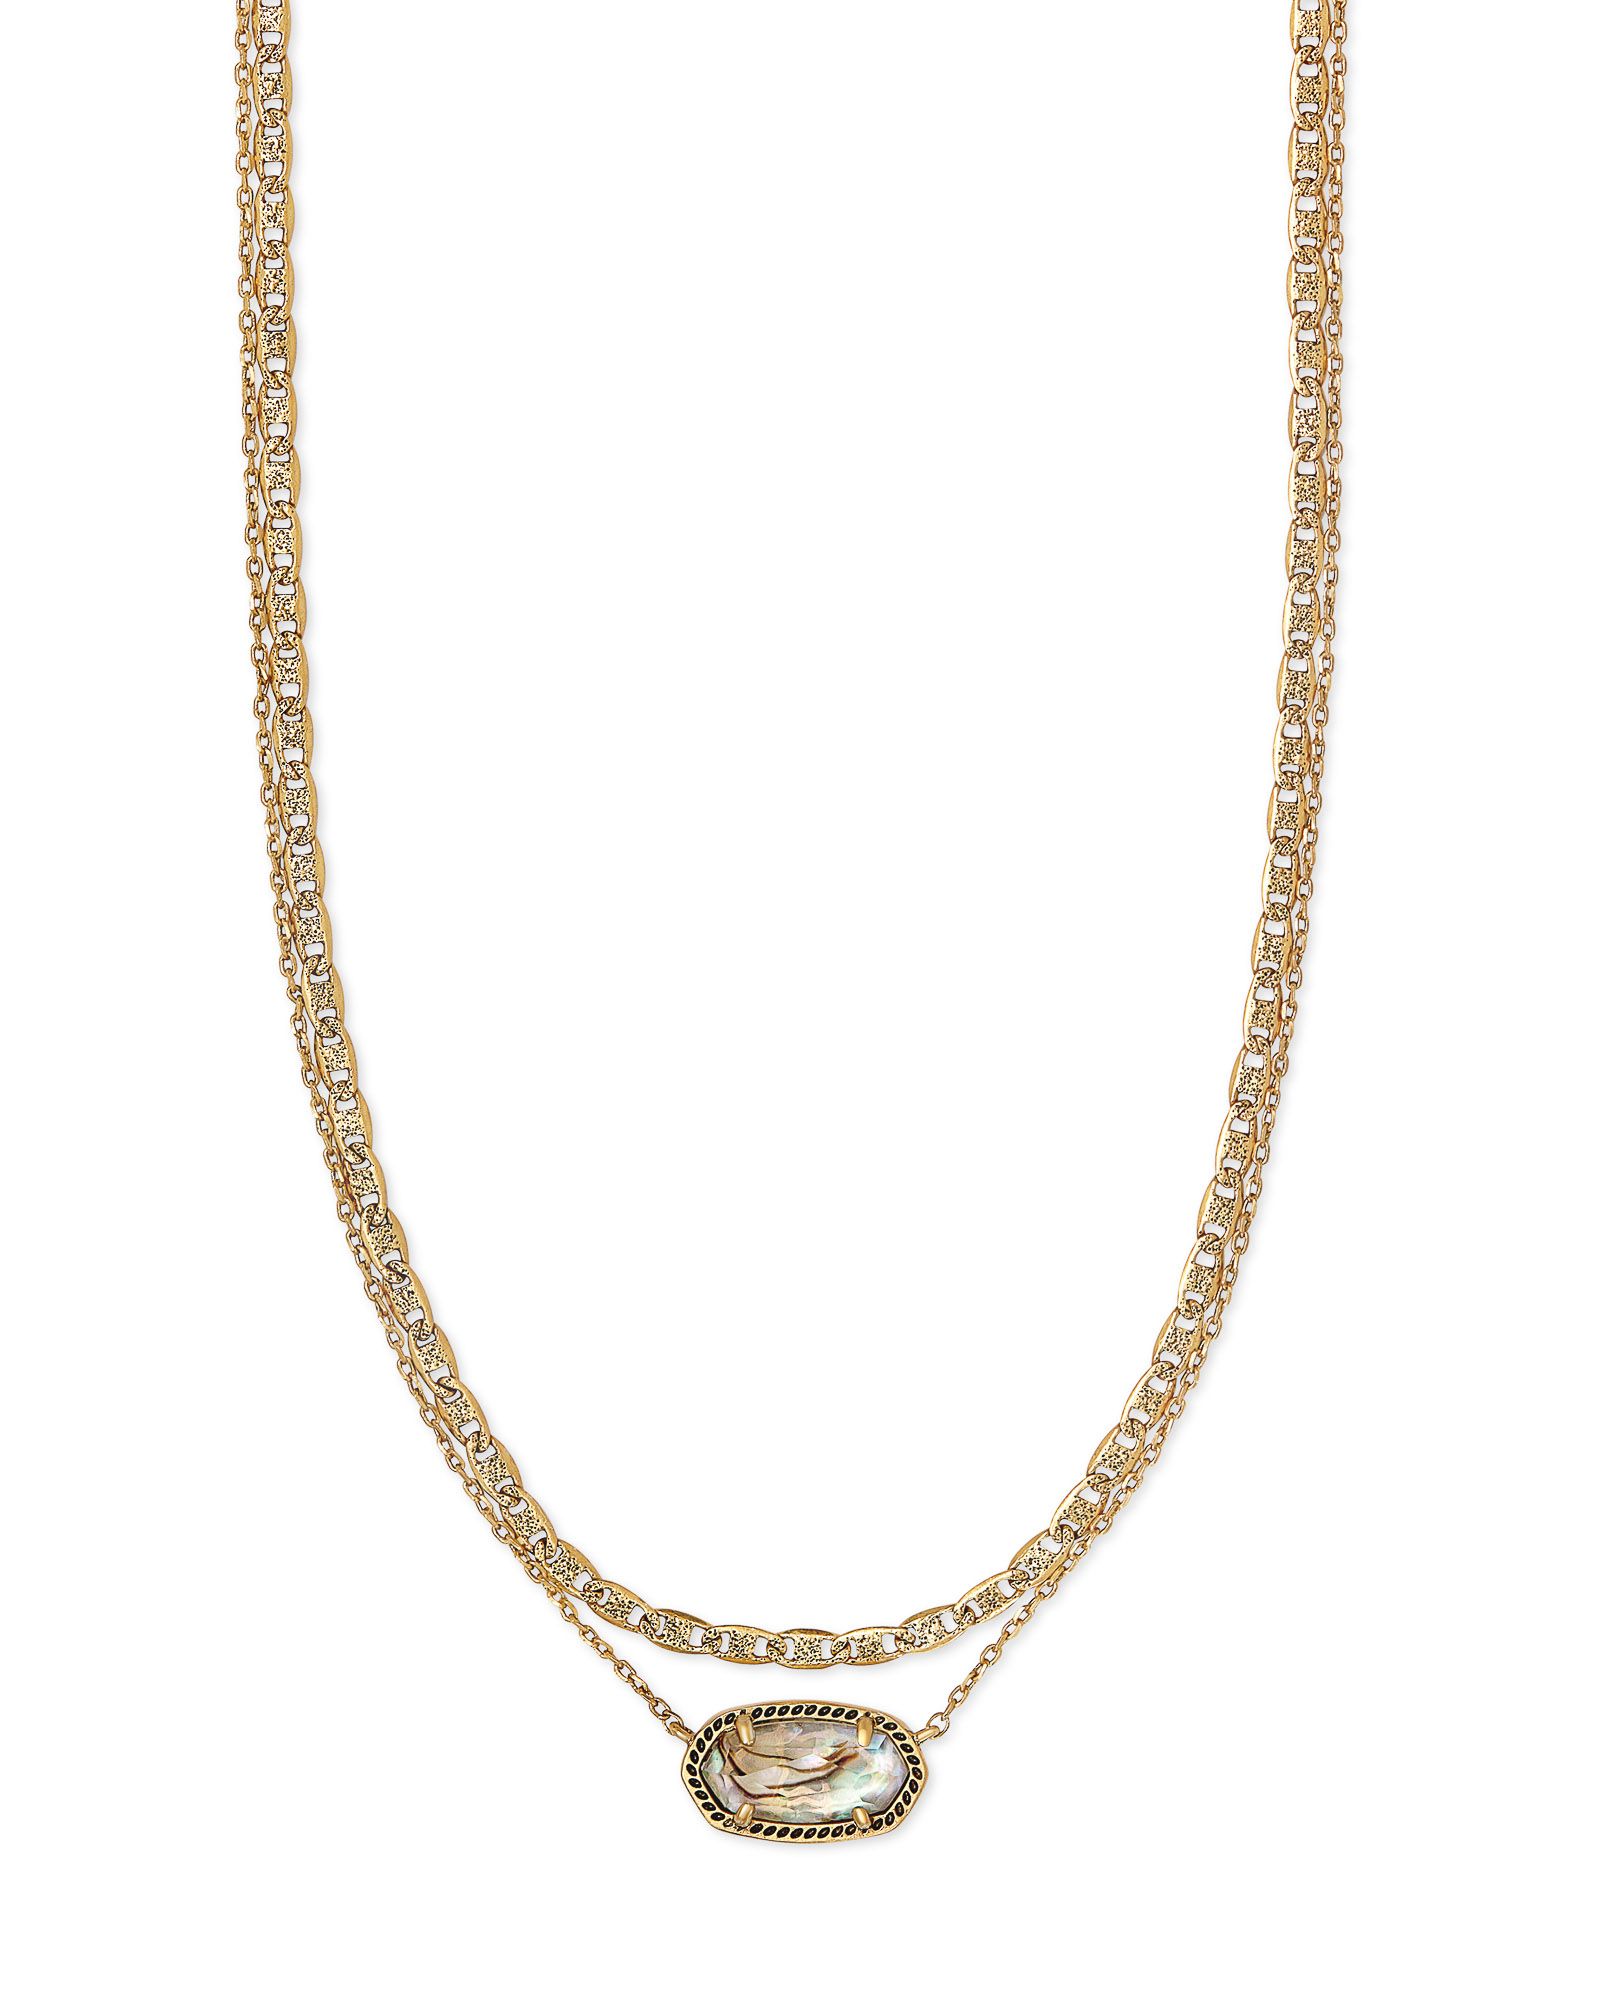 Elisa Vintage Gold Multi Strand Necklace in White Abalone | Kendra Scott